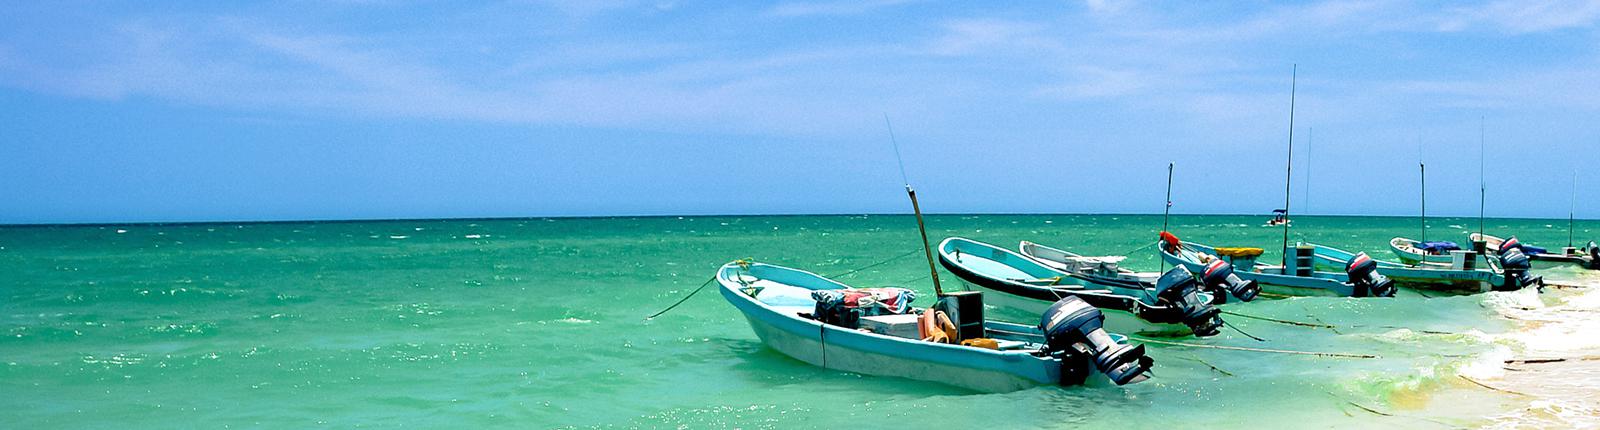 View of boats in the beautiful blue waters of Progreso, Yucatan